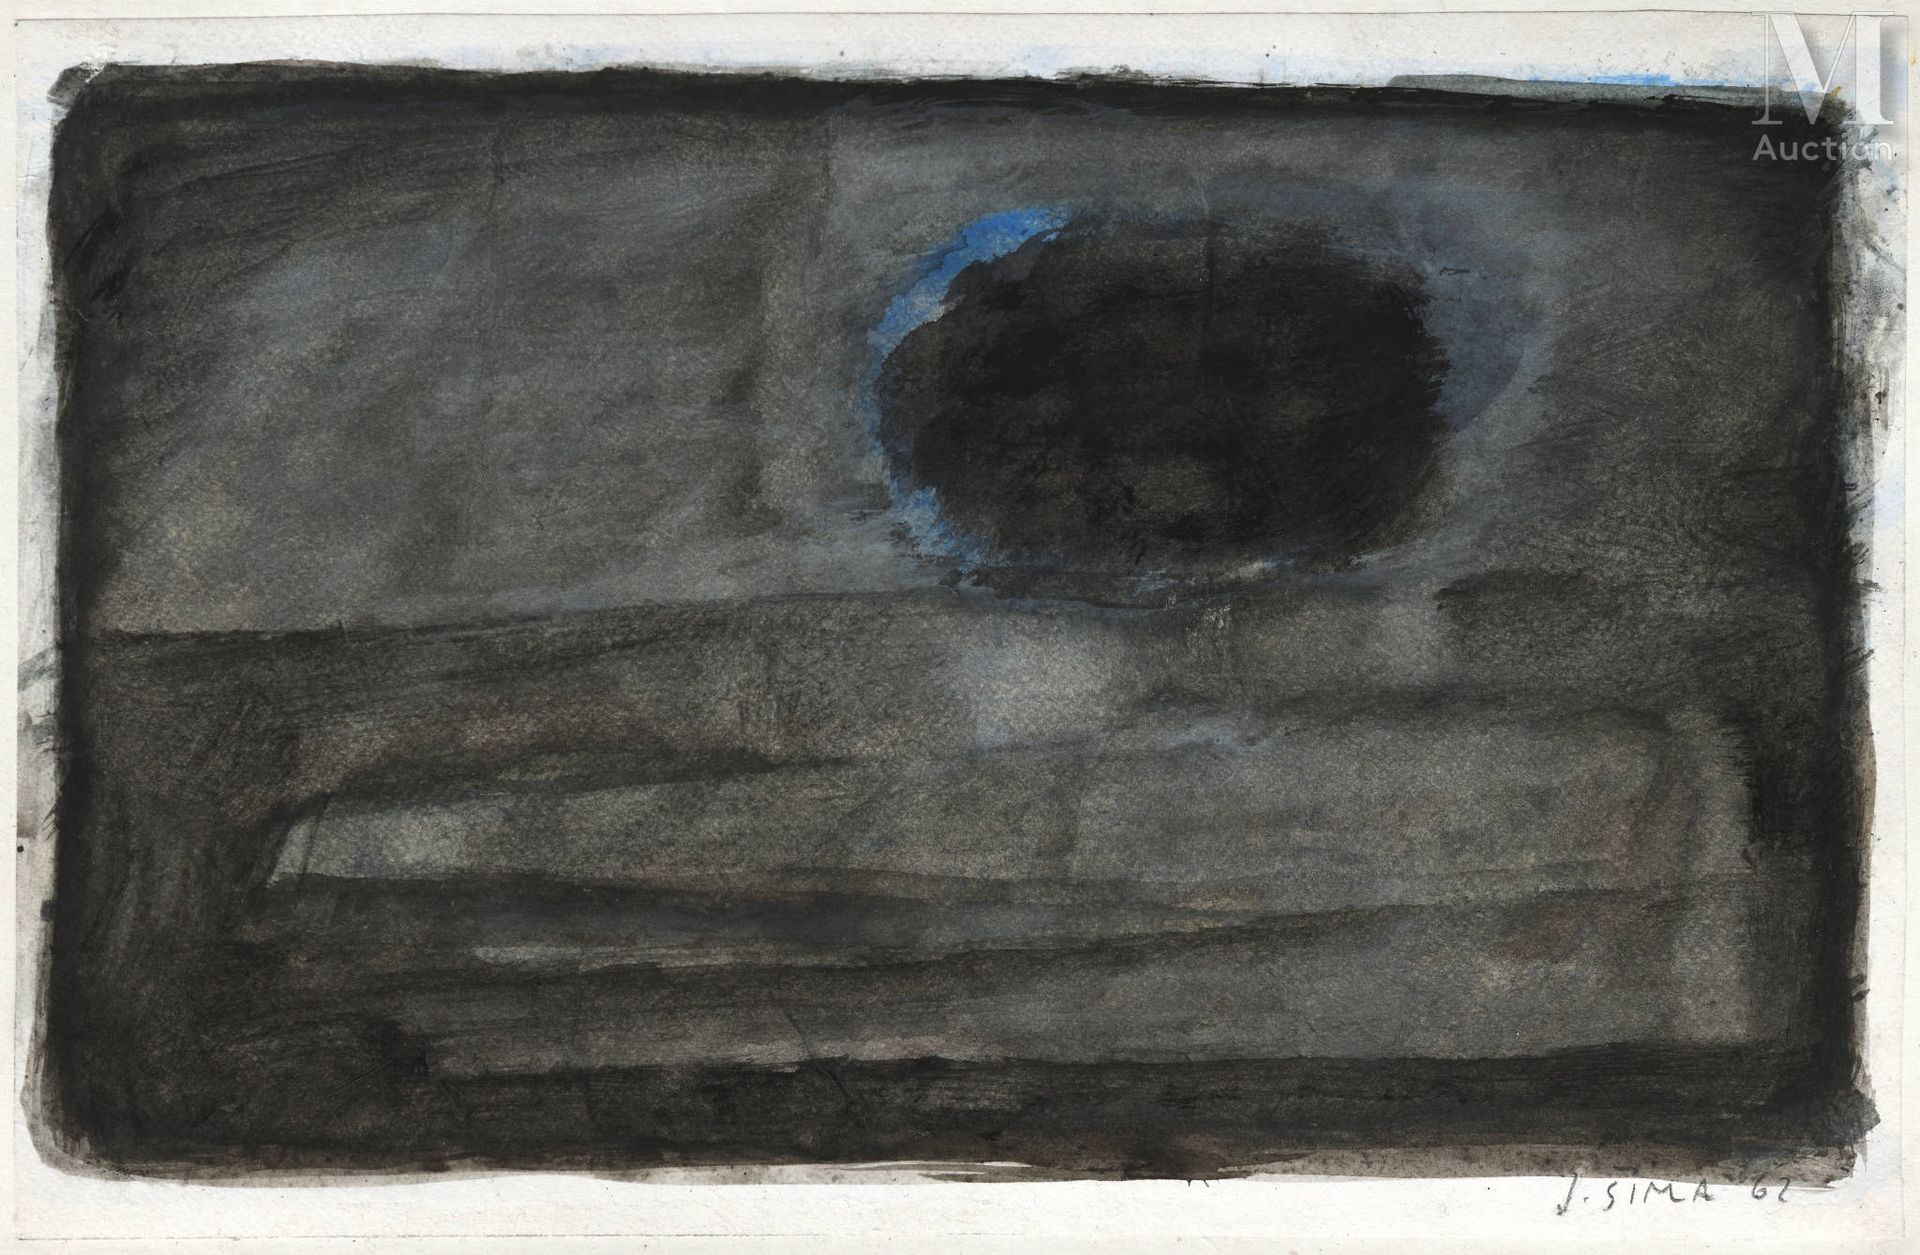 Josef SIMA (1891-1971) 无题》，1962年

纸上水墨画，右下方有签名和日期

27 x 41.5厘米



出处 :

私人收藏